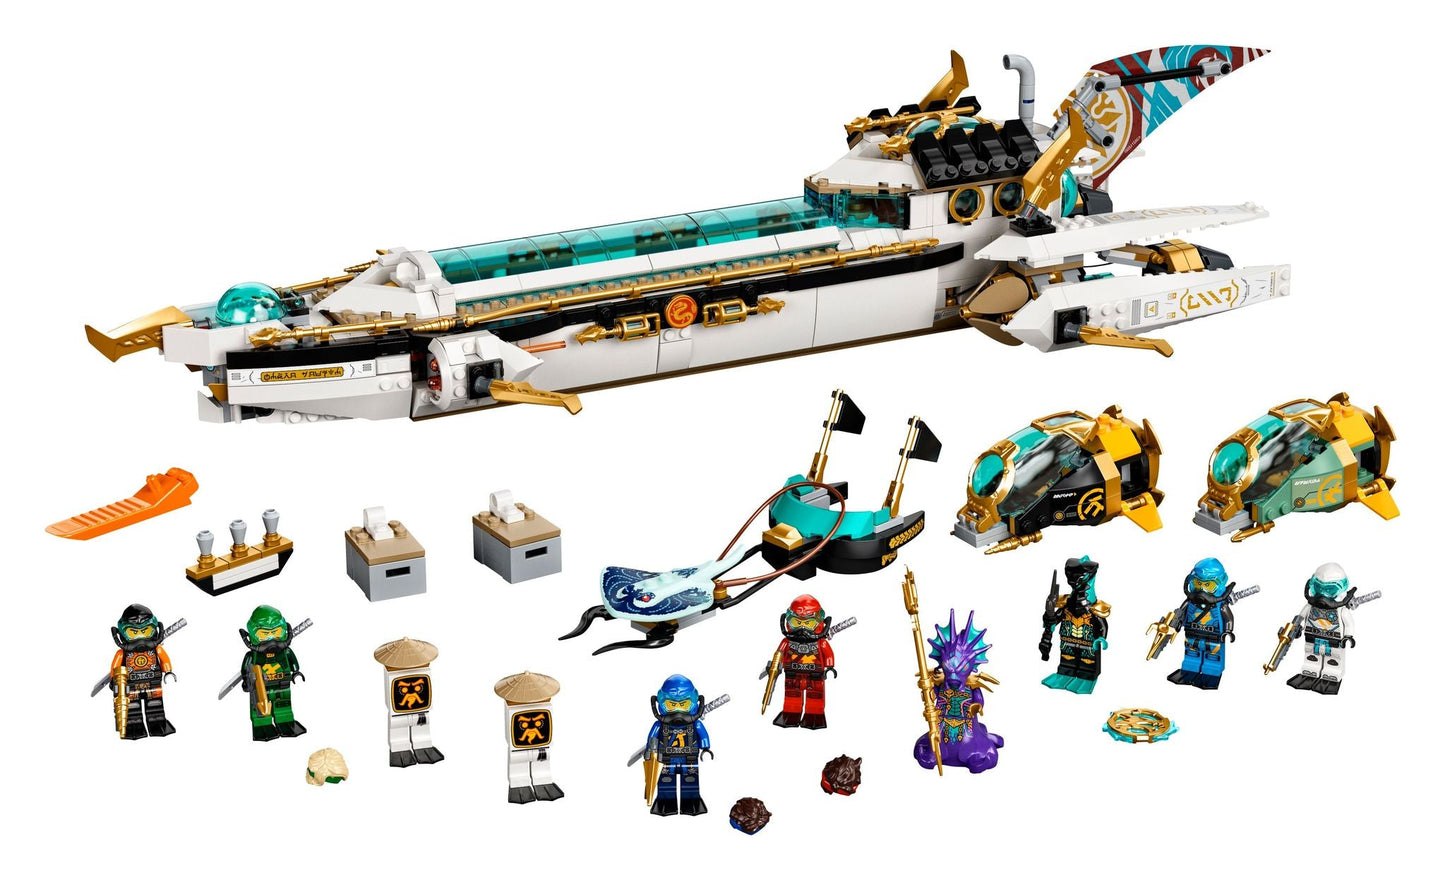 71756 Hydro Bounty (Retired) LEGO Ninjago